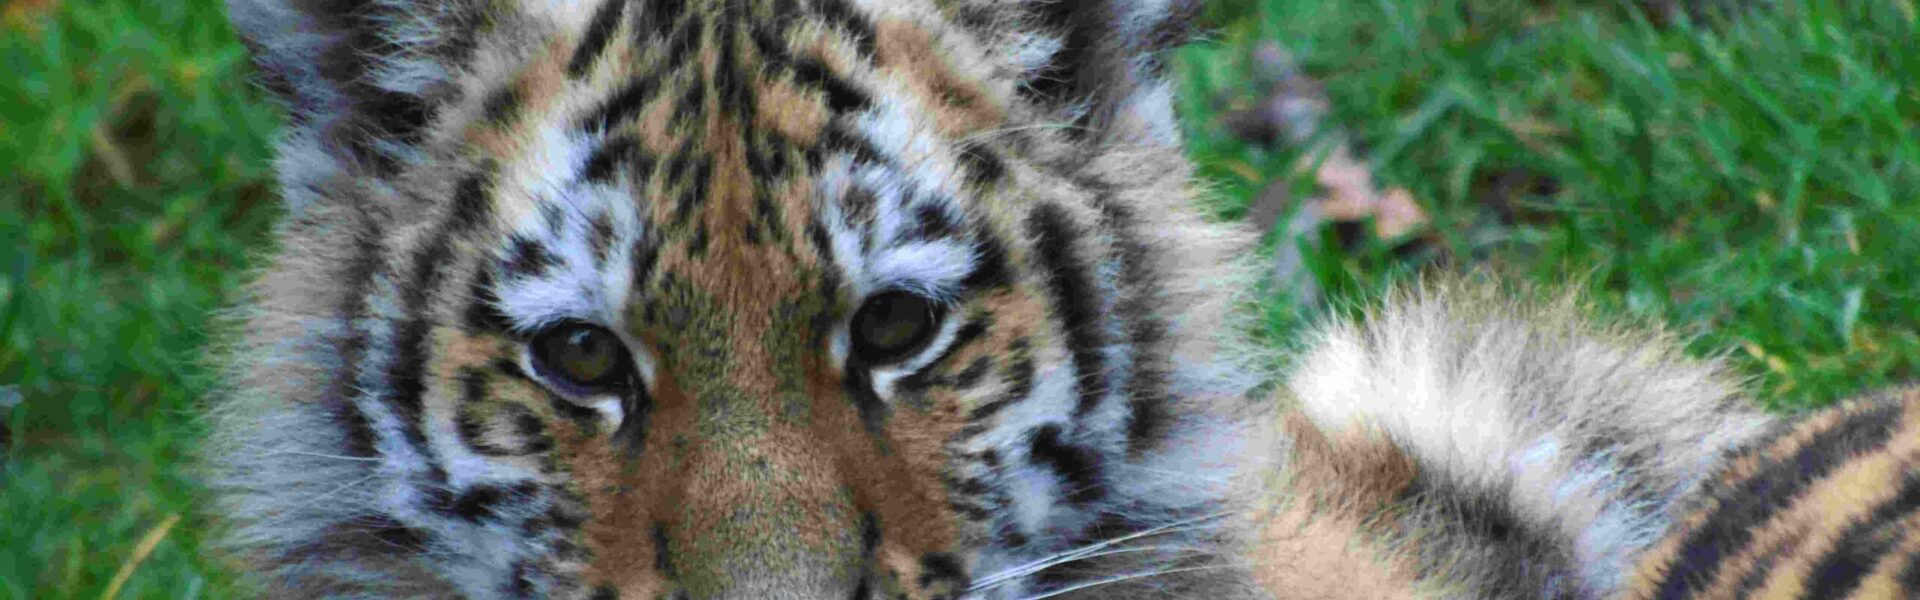 Tigresa del Sur de China da a luz a trillizos en centro de conservación de Fujian